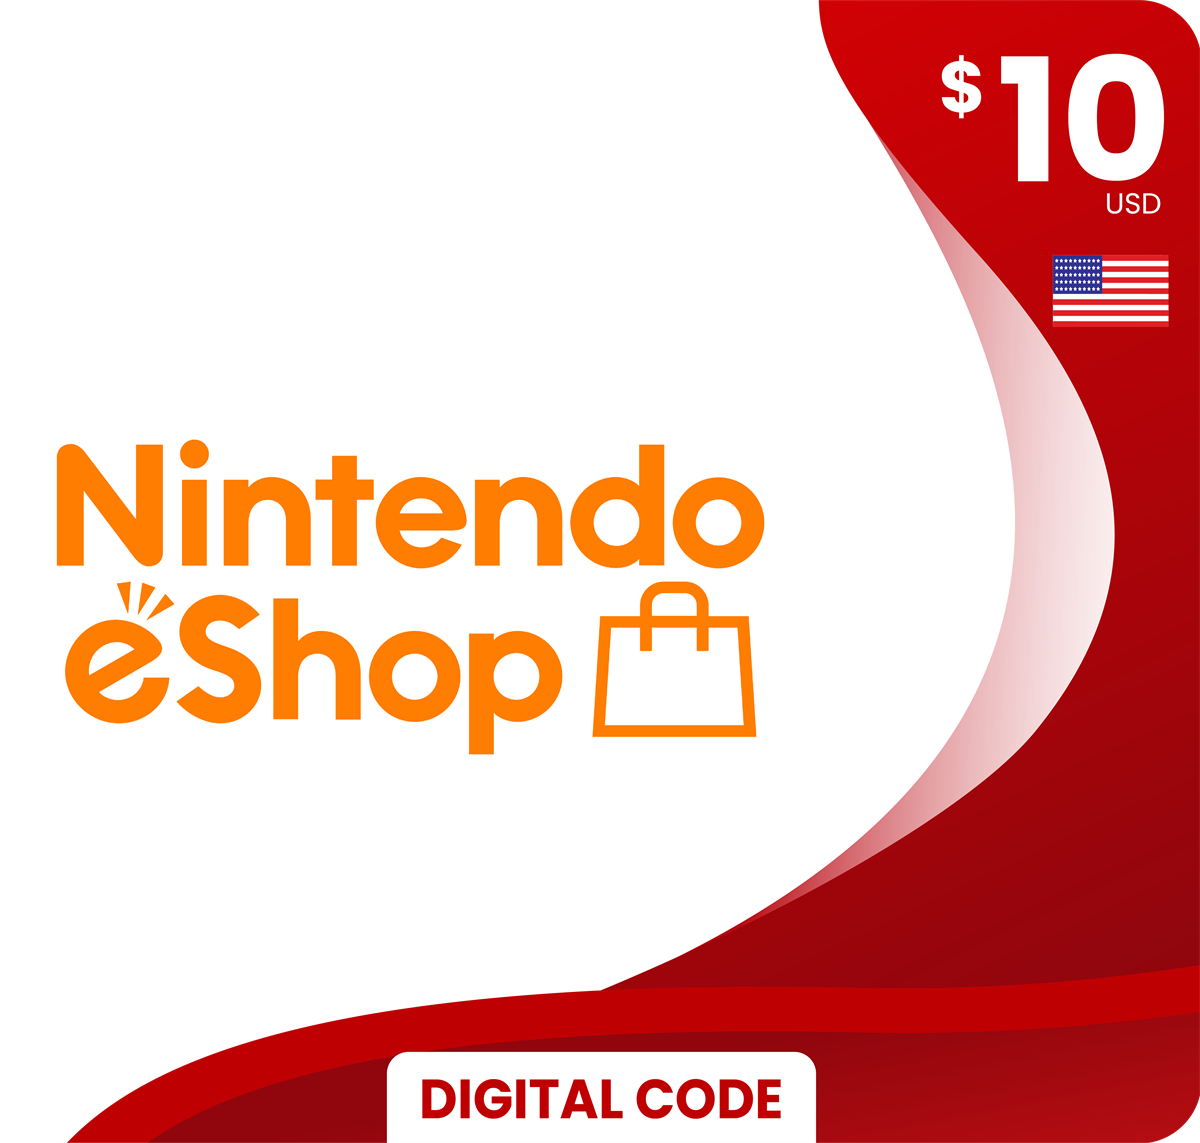 Nintendo eShop Gift Cards 10$ - USA